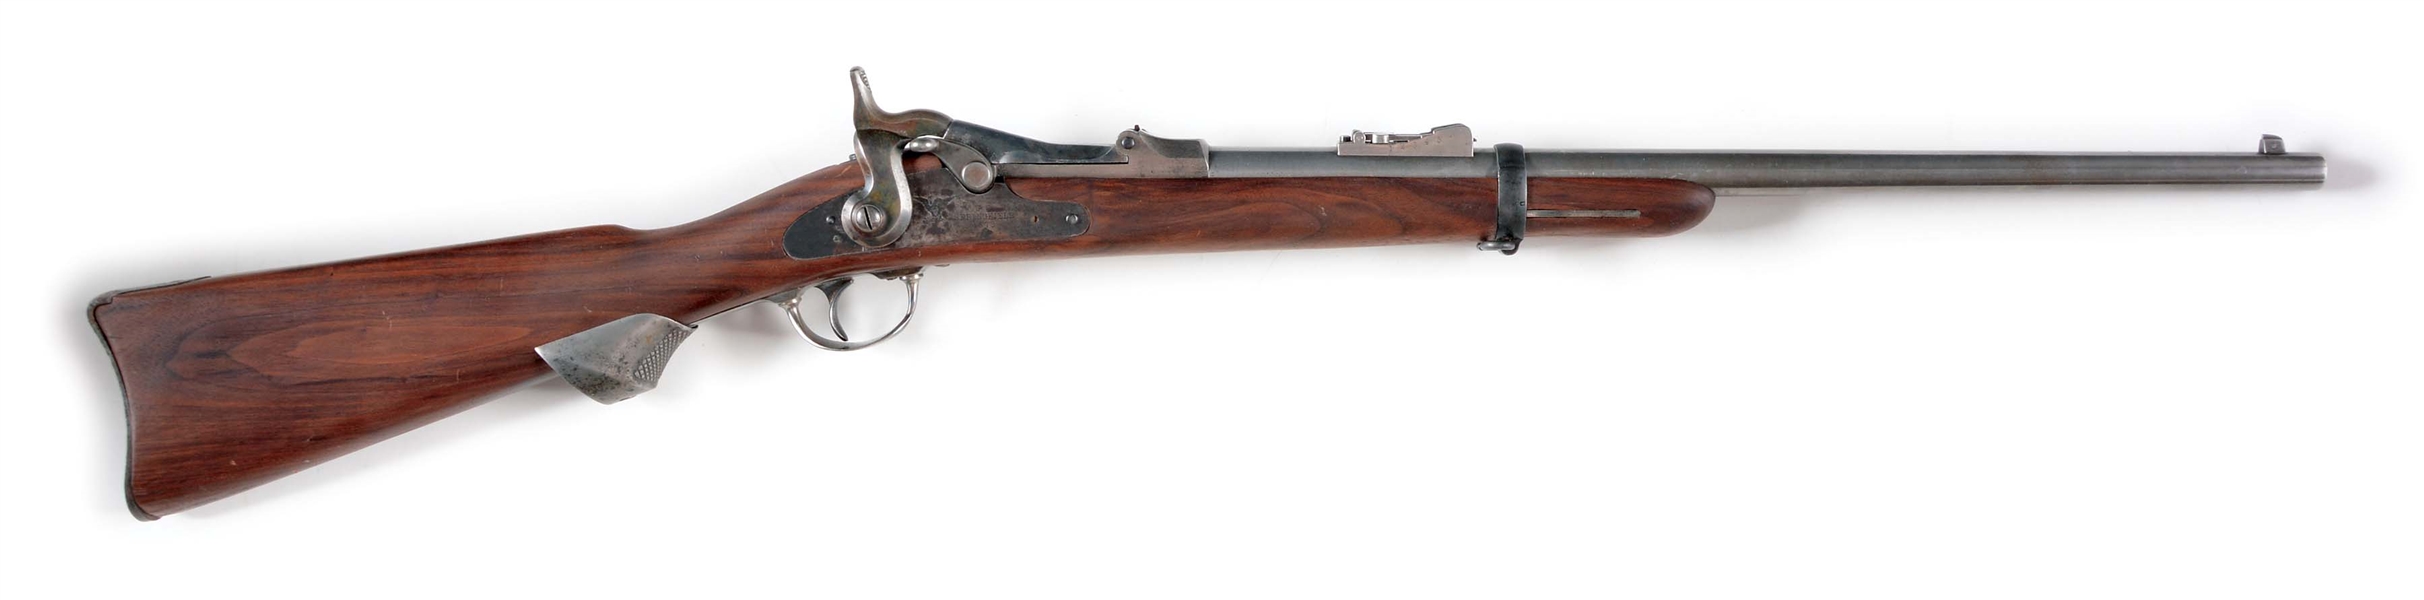 1873 springfield carbine sight